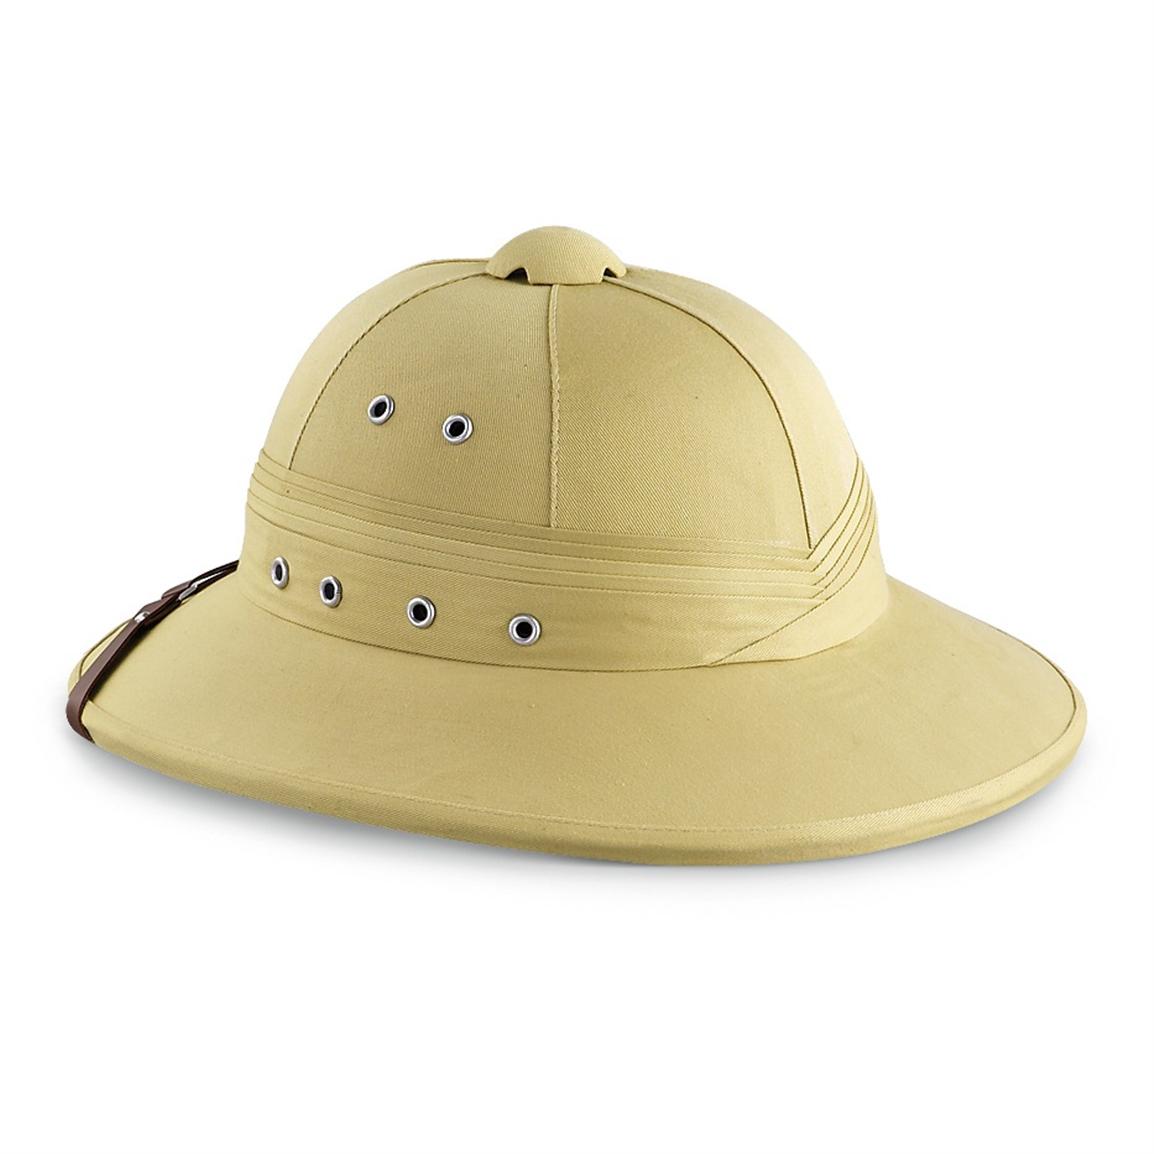 U.S. Military - style Pith Helmet, Khaki - 204774, Military Hats & Caps at Sportsman's Guide